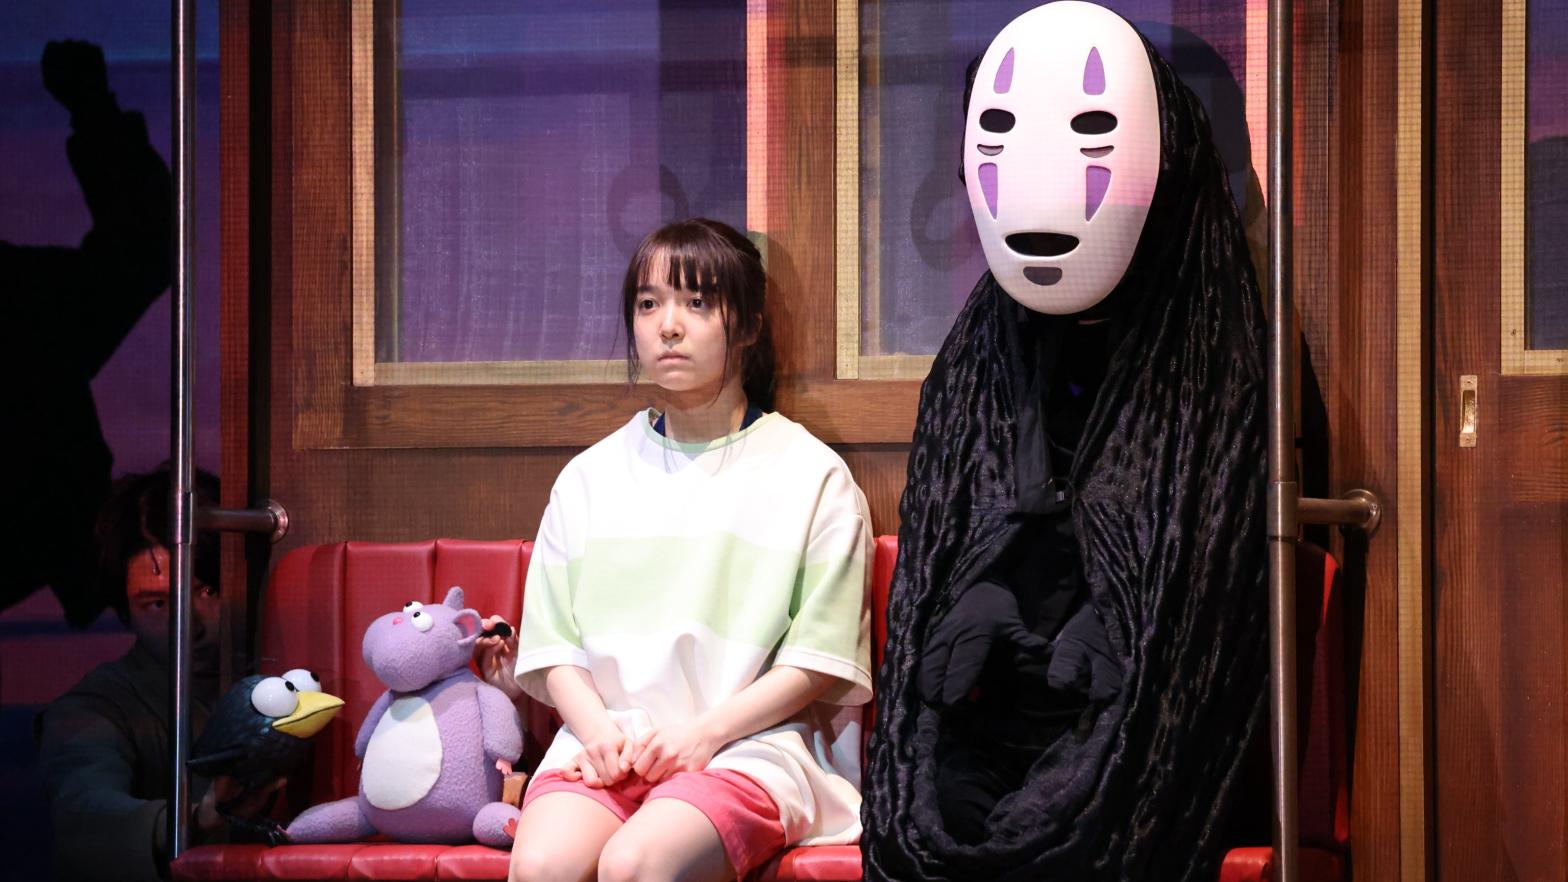 Chihiro (Mone Kamishiraish) and No-Face (Tomohiro Tsujimoto). (Image: Toho Co., Ltd.)